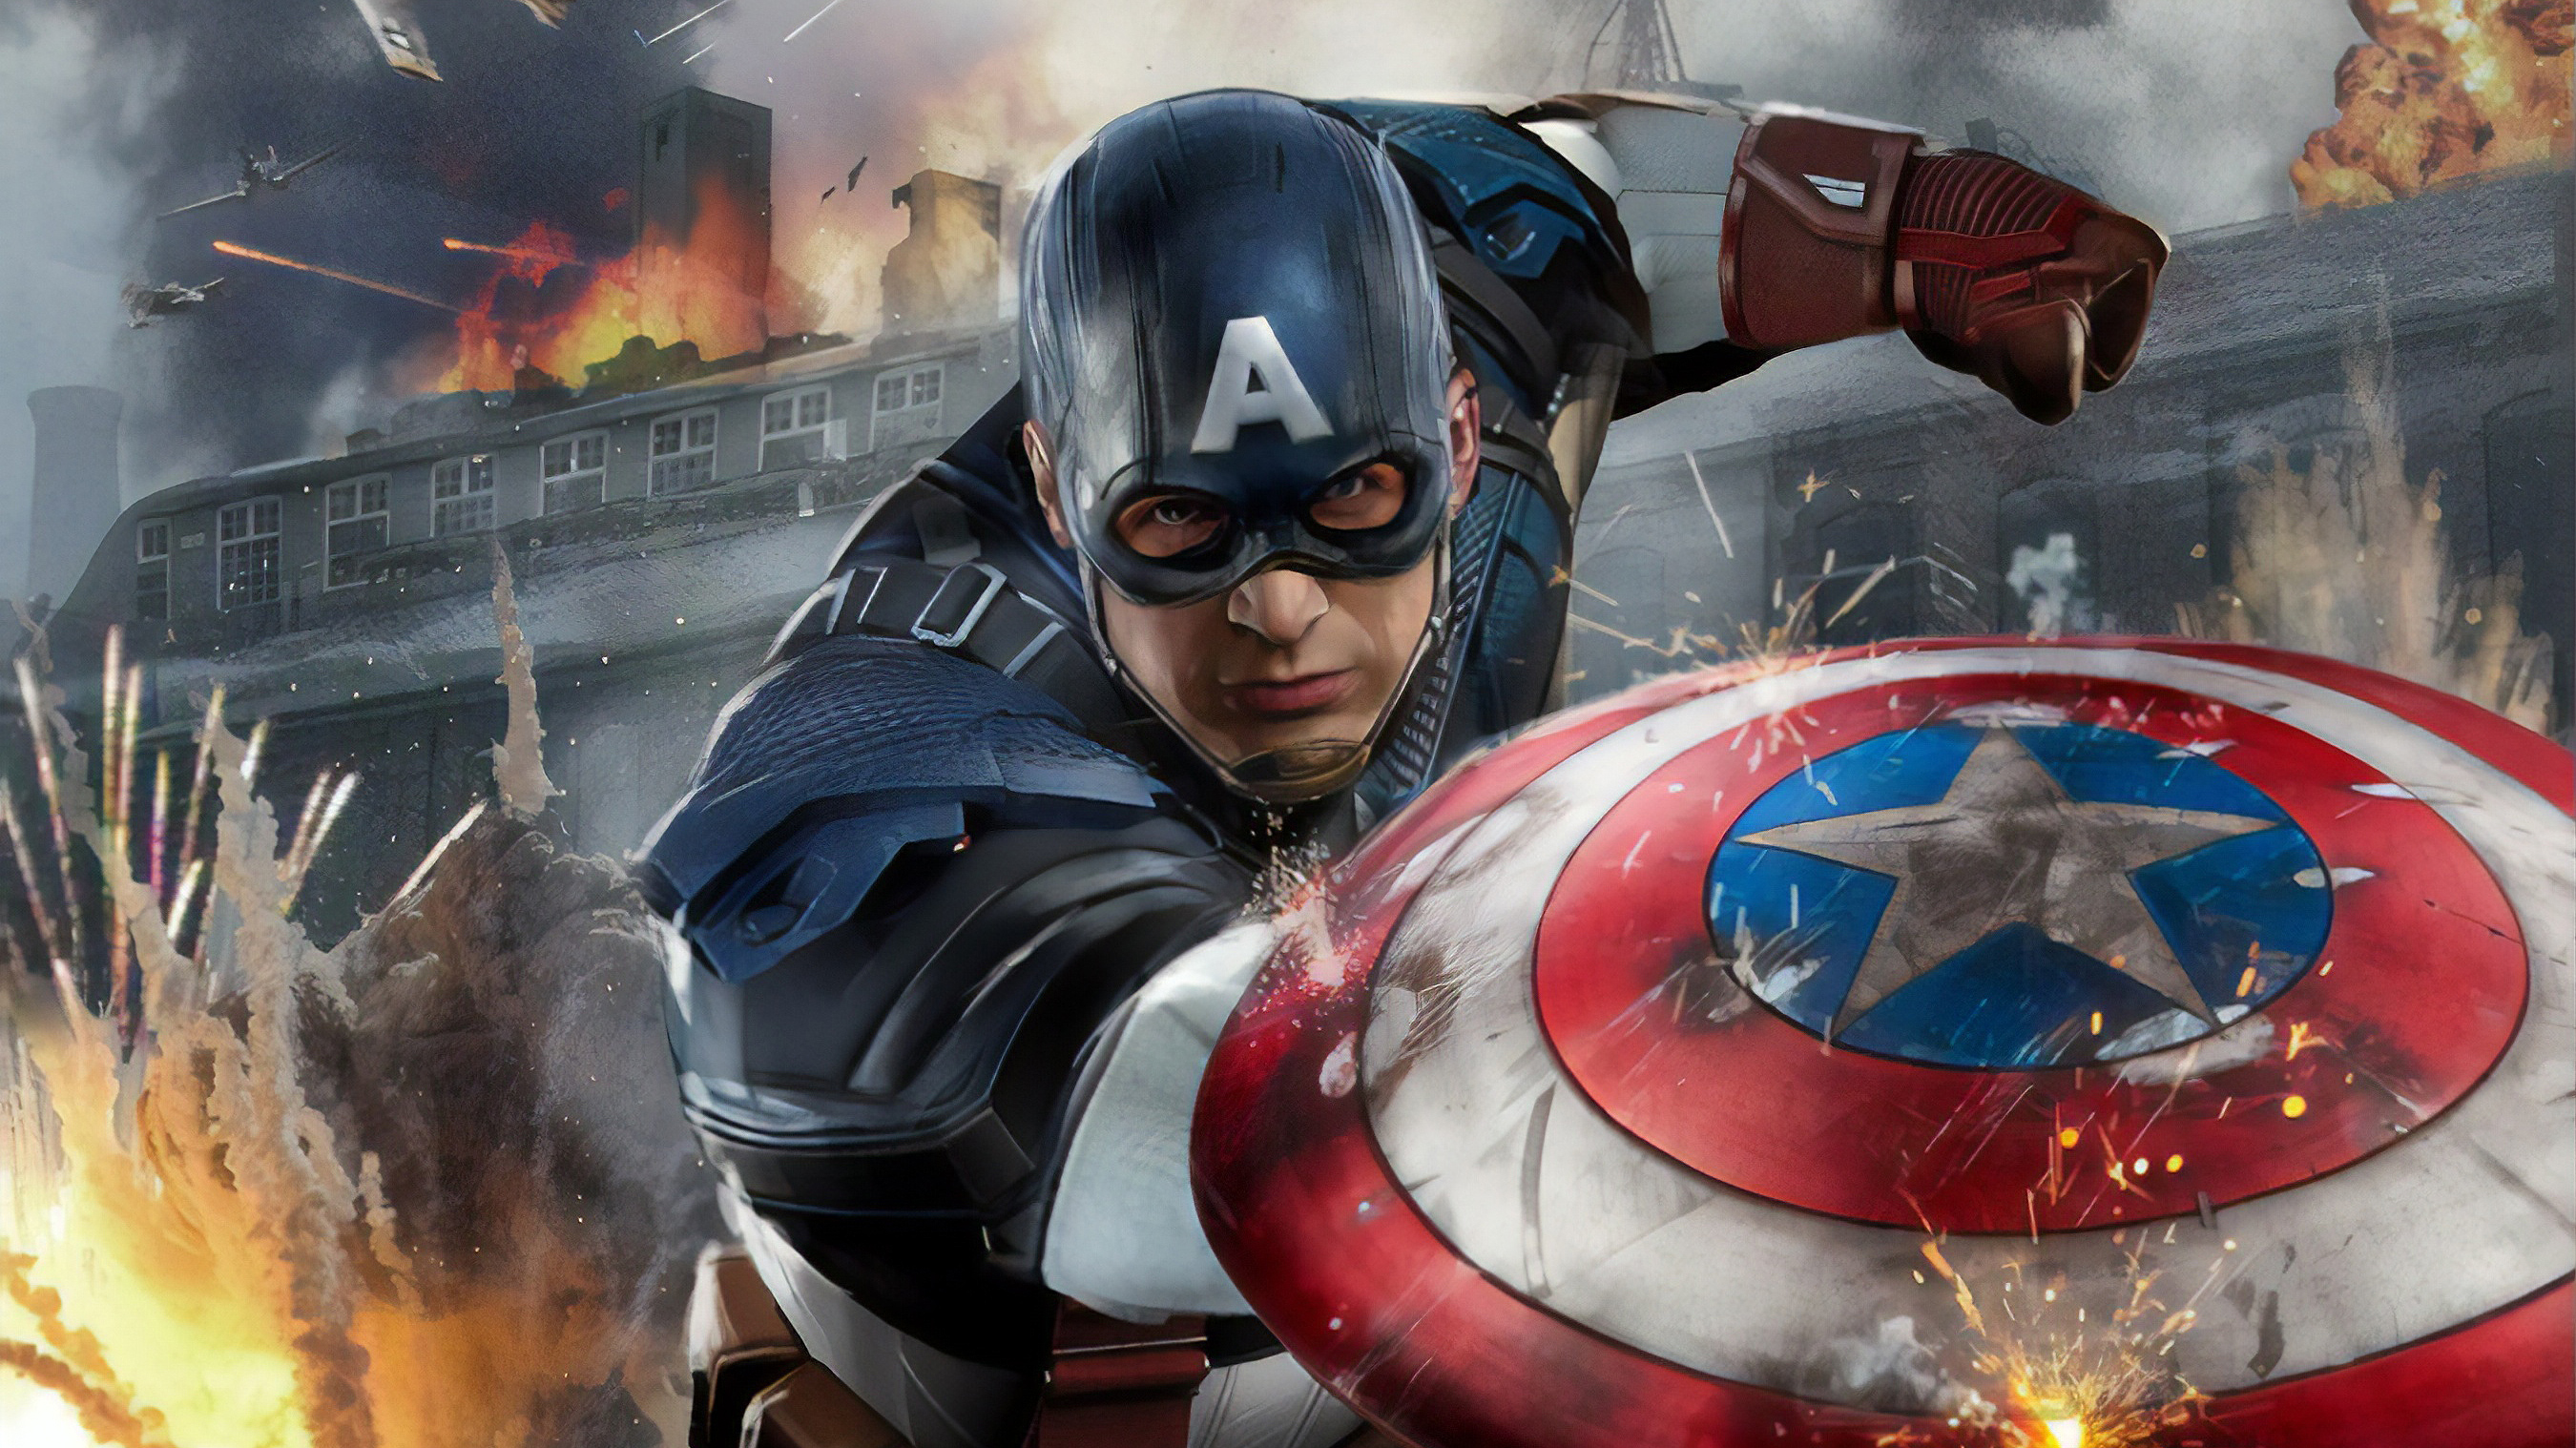 Hd Captain America Wallpaper : FREE 20+ Captain America Wallpapers in